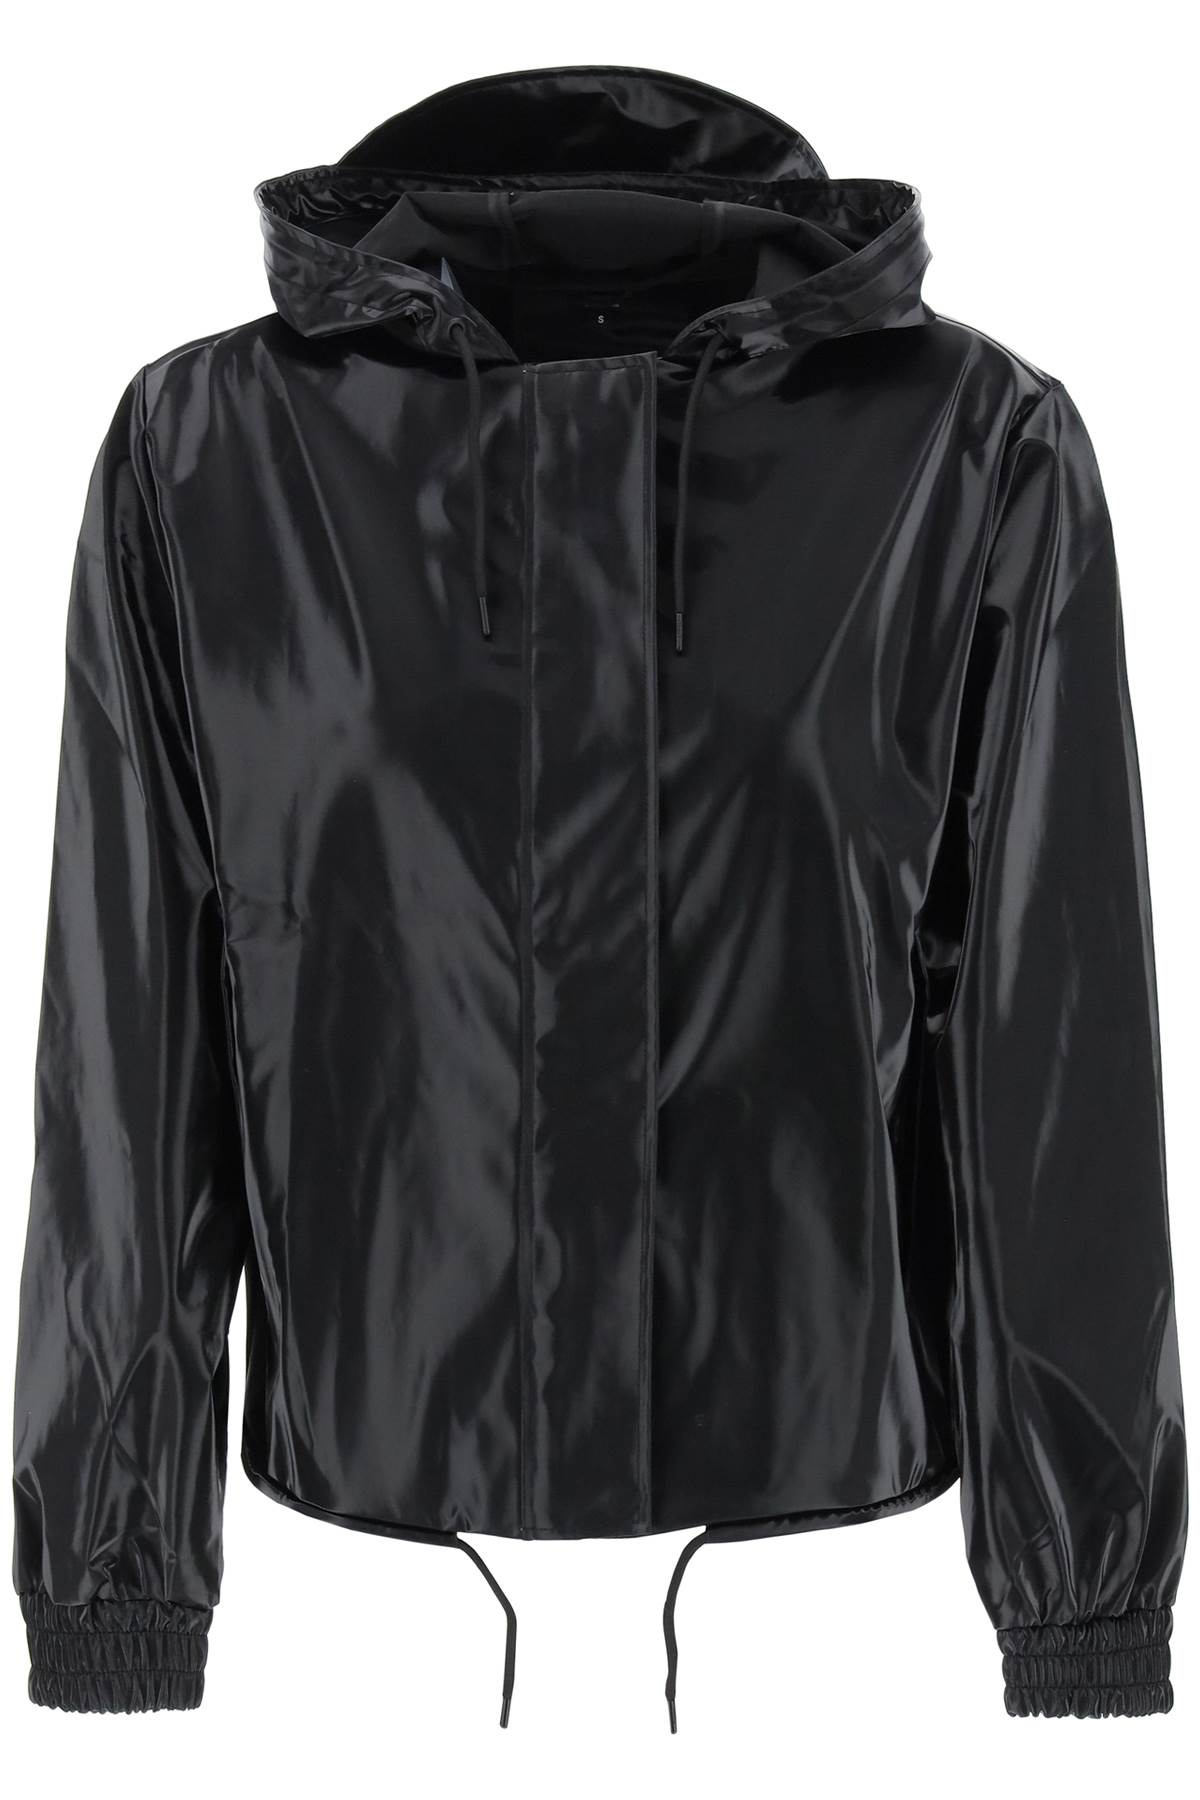 Rains rain jacket in techno fabric 18040 NIGHT